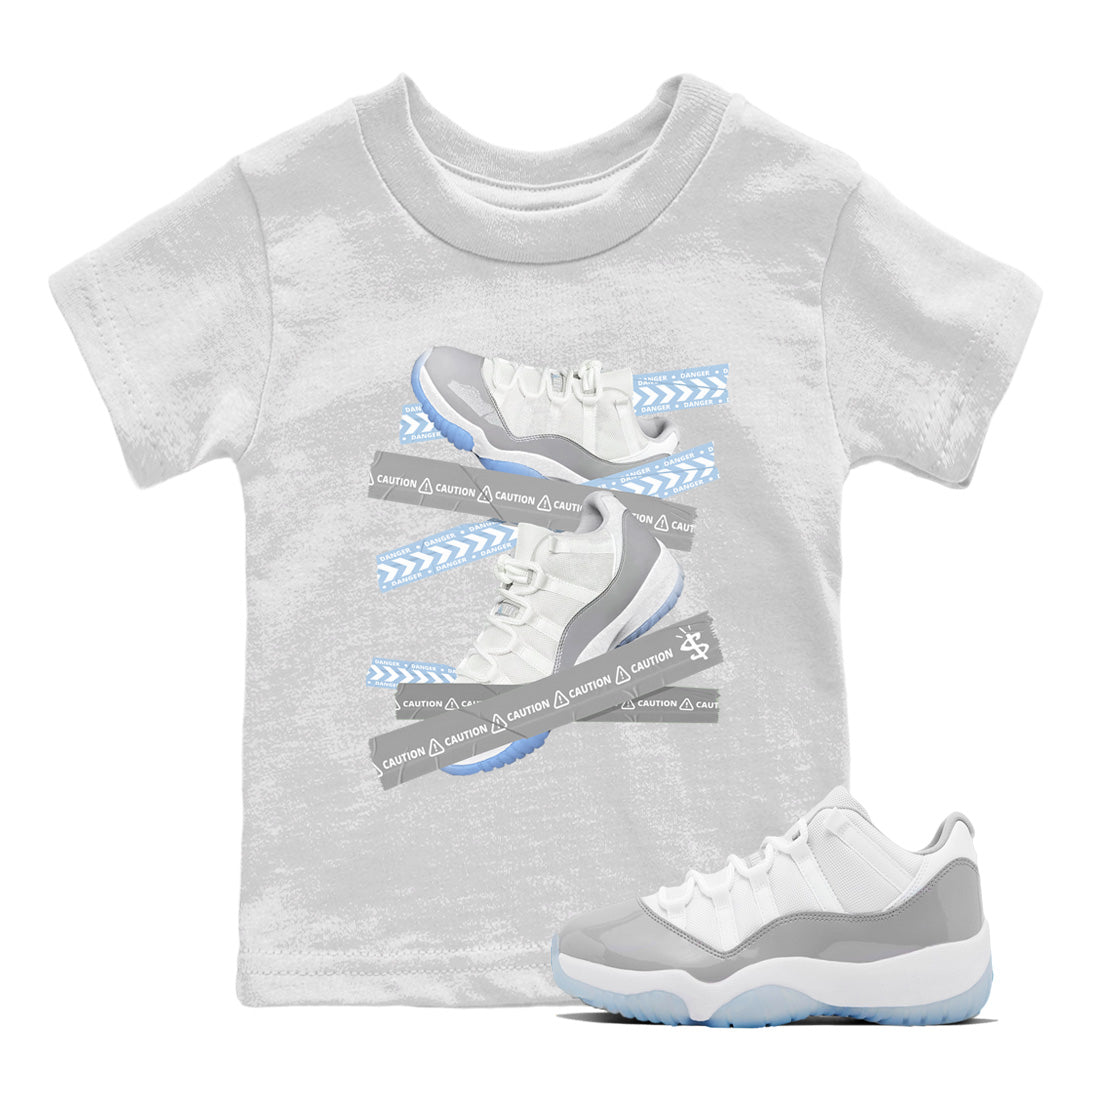 Air Jordan 11 White Cement Sneaker Match Tees Caution Tape Streetwear Sneaker Shirt Air Jordan 11 Cement Grey Sneaker Release Tees Kids Shirts White 1